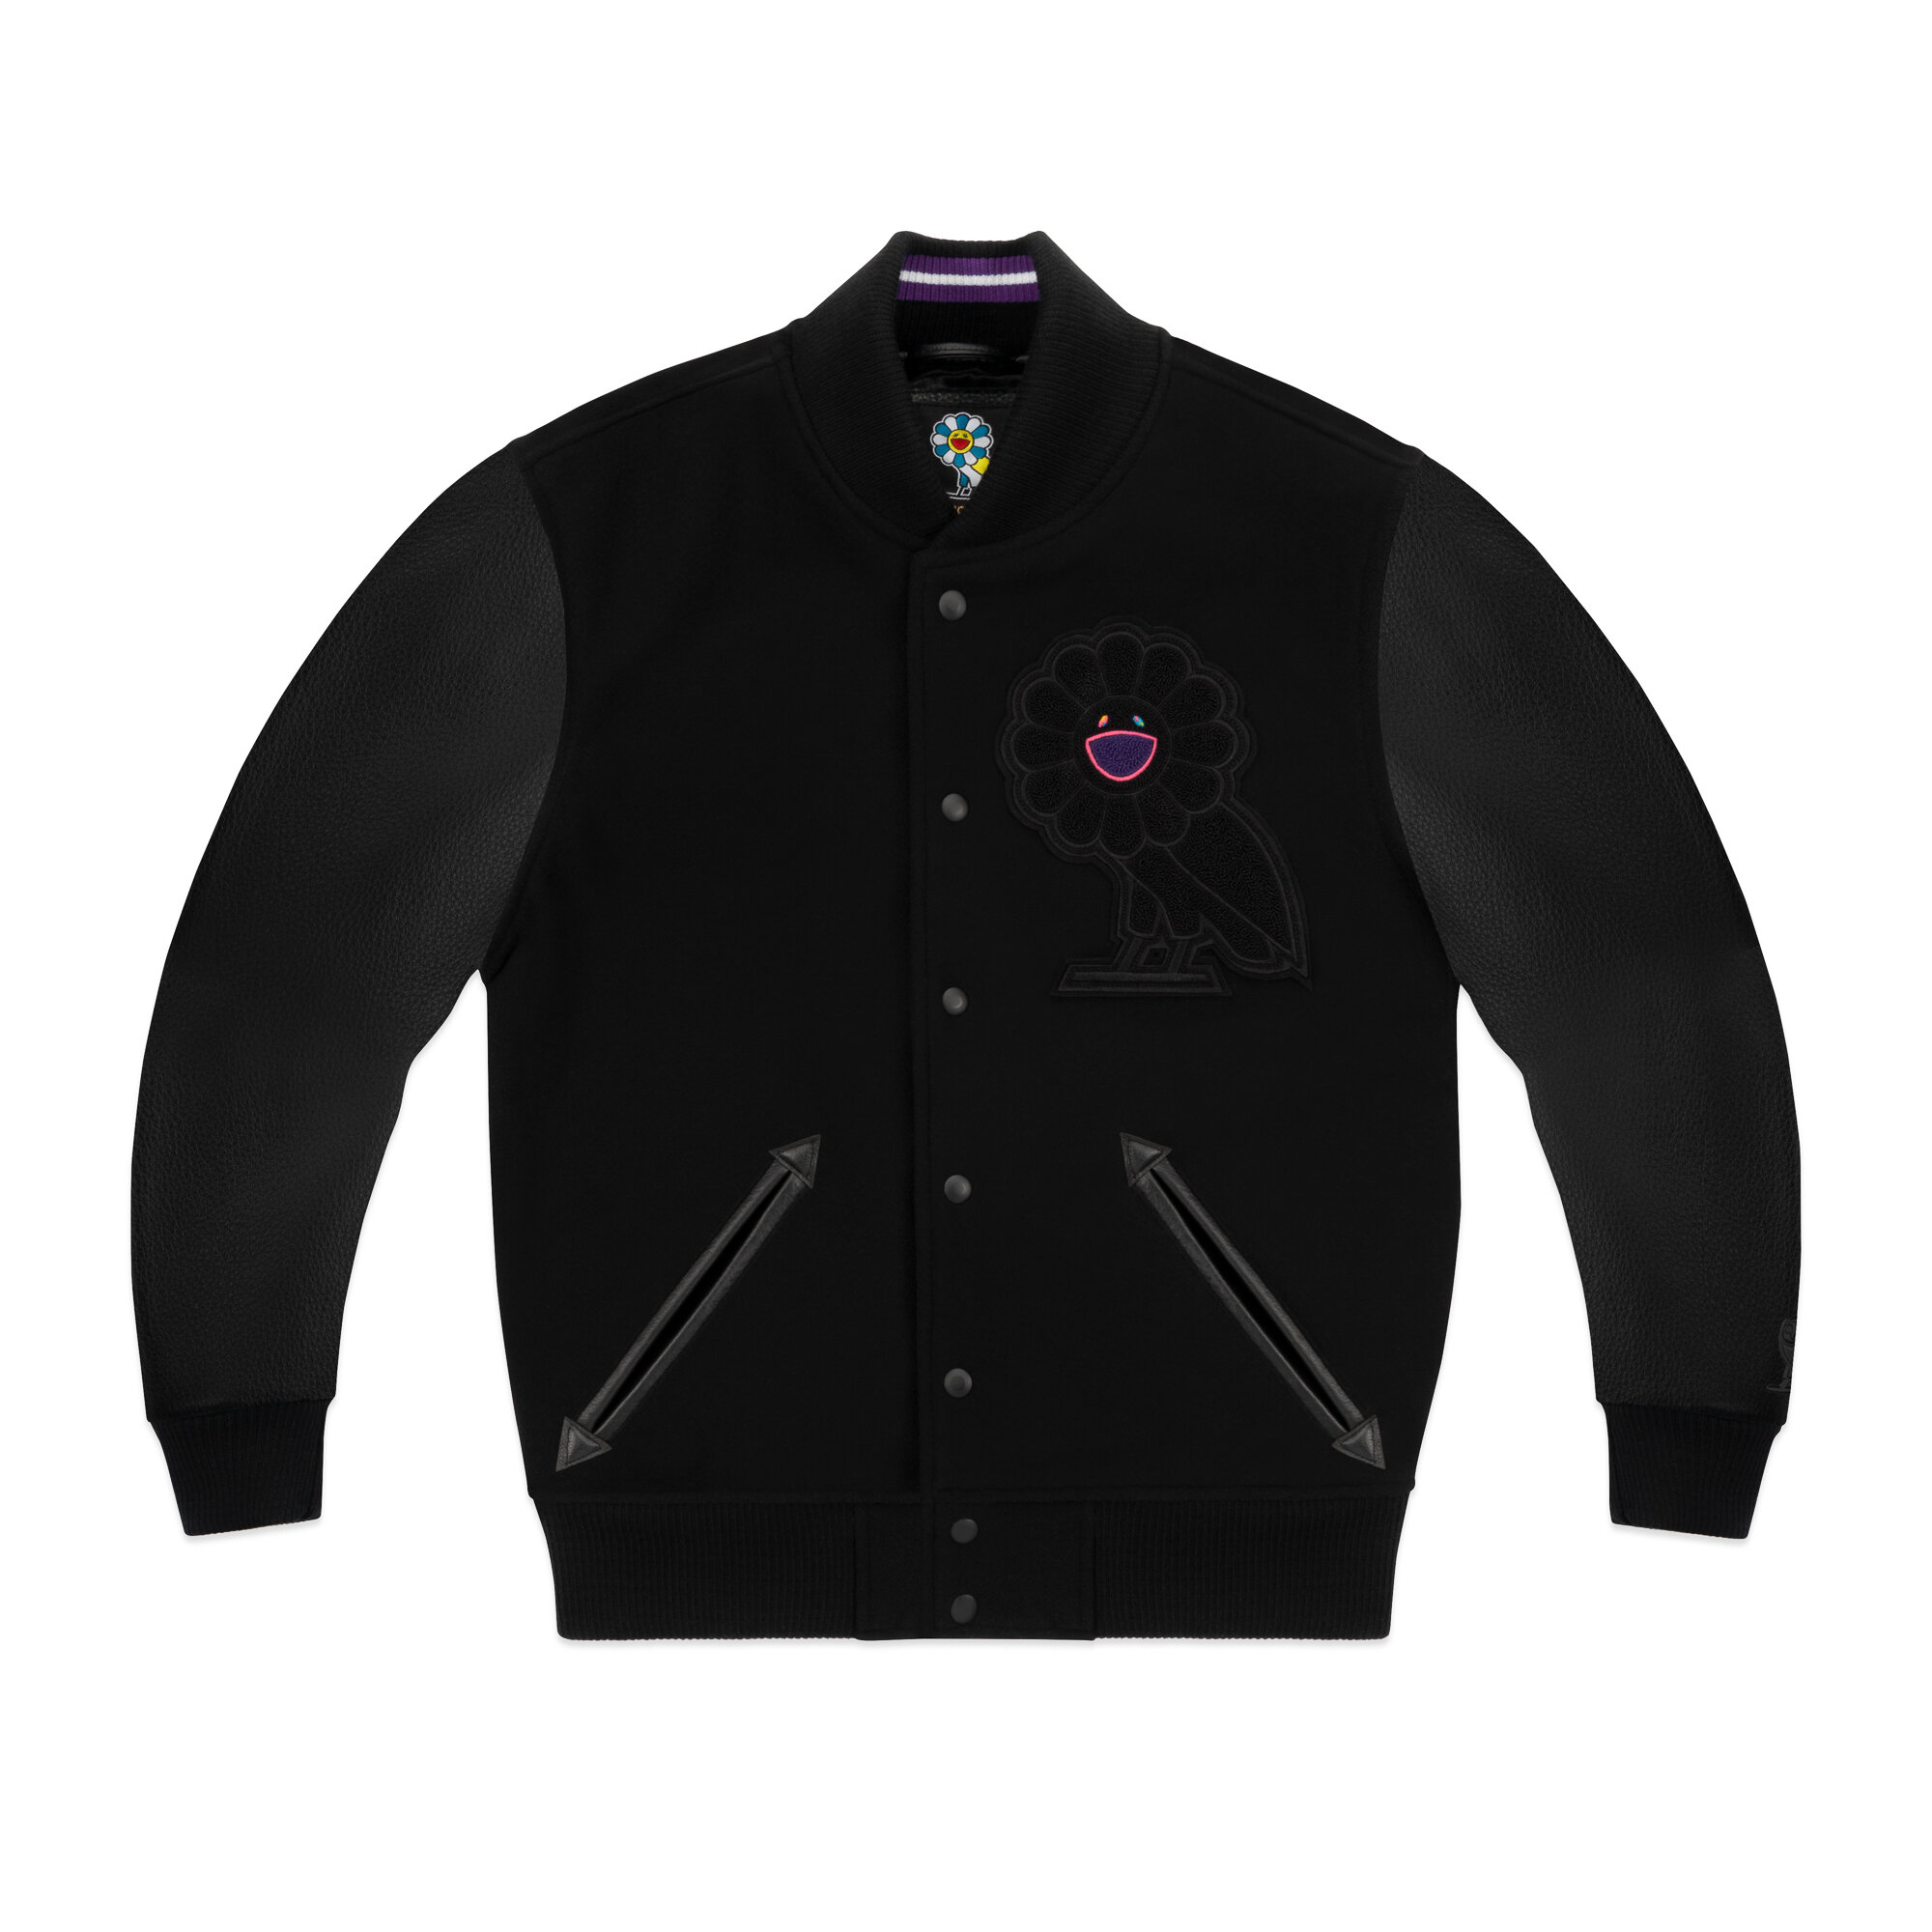 OVO x Murakami Team Jacket Black Multi L | labiela.com